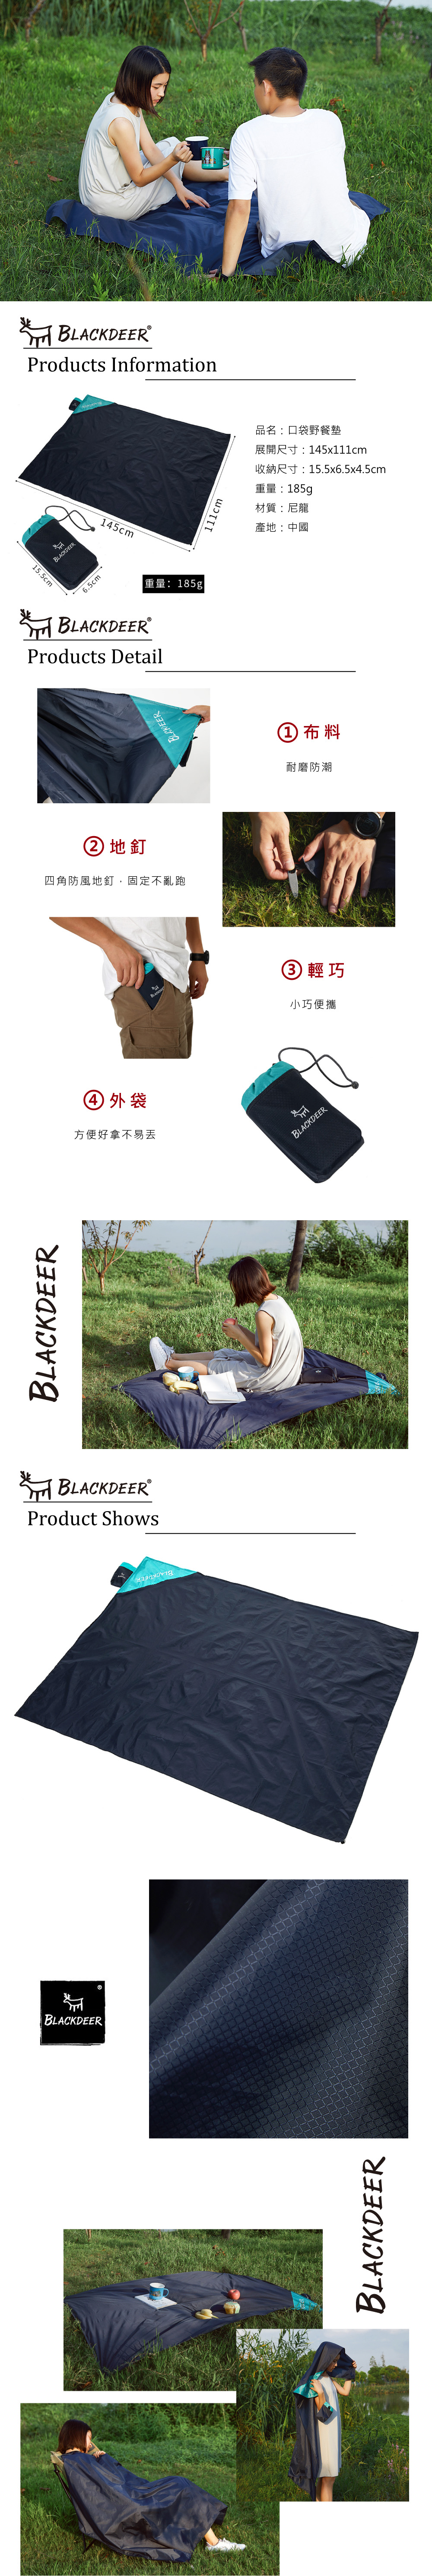 【BlackDeer】口袋野餐墊.jpg